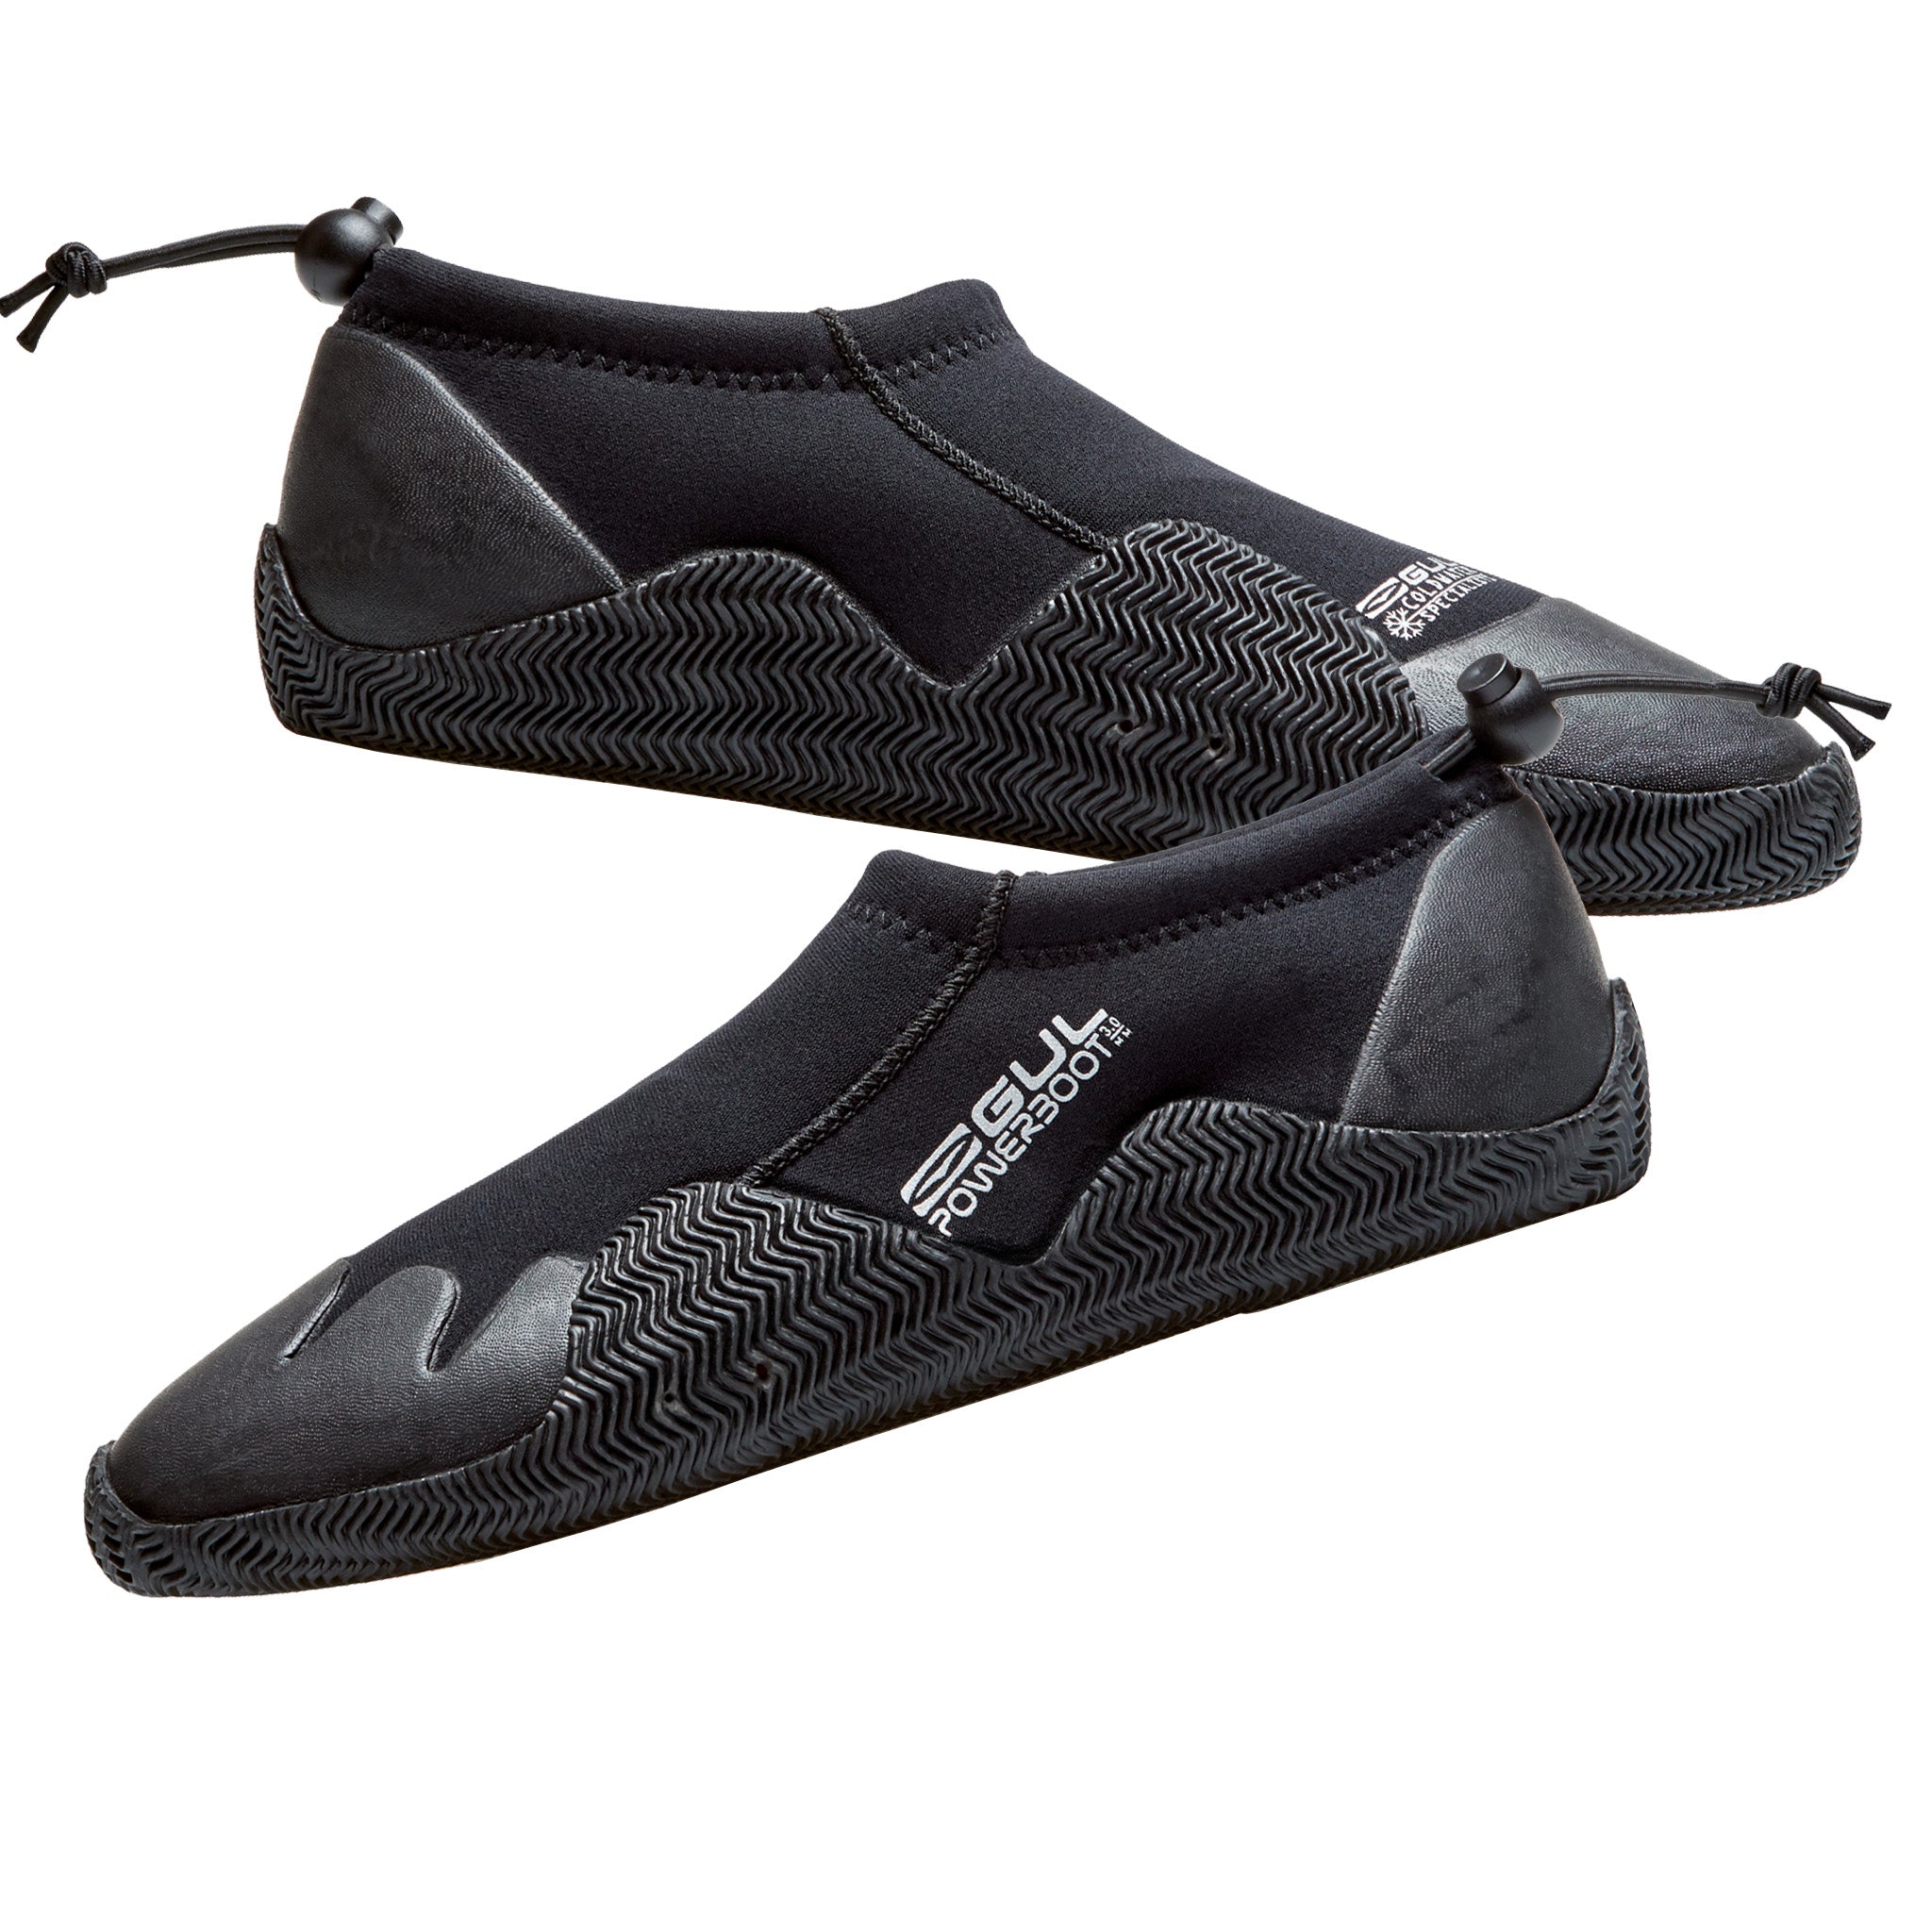 Gul Power Slipper 3mm Neoprene Wetsuit Shoes Black